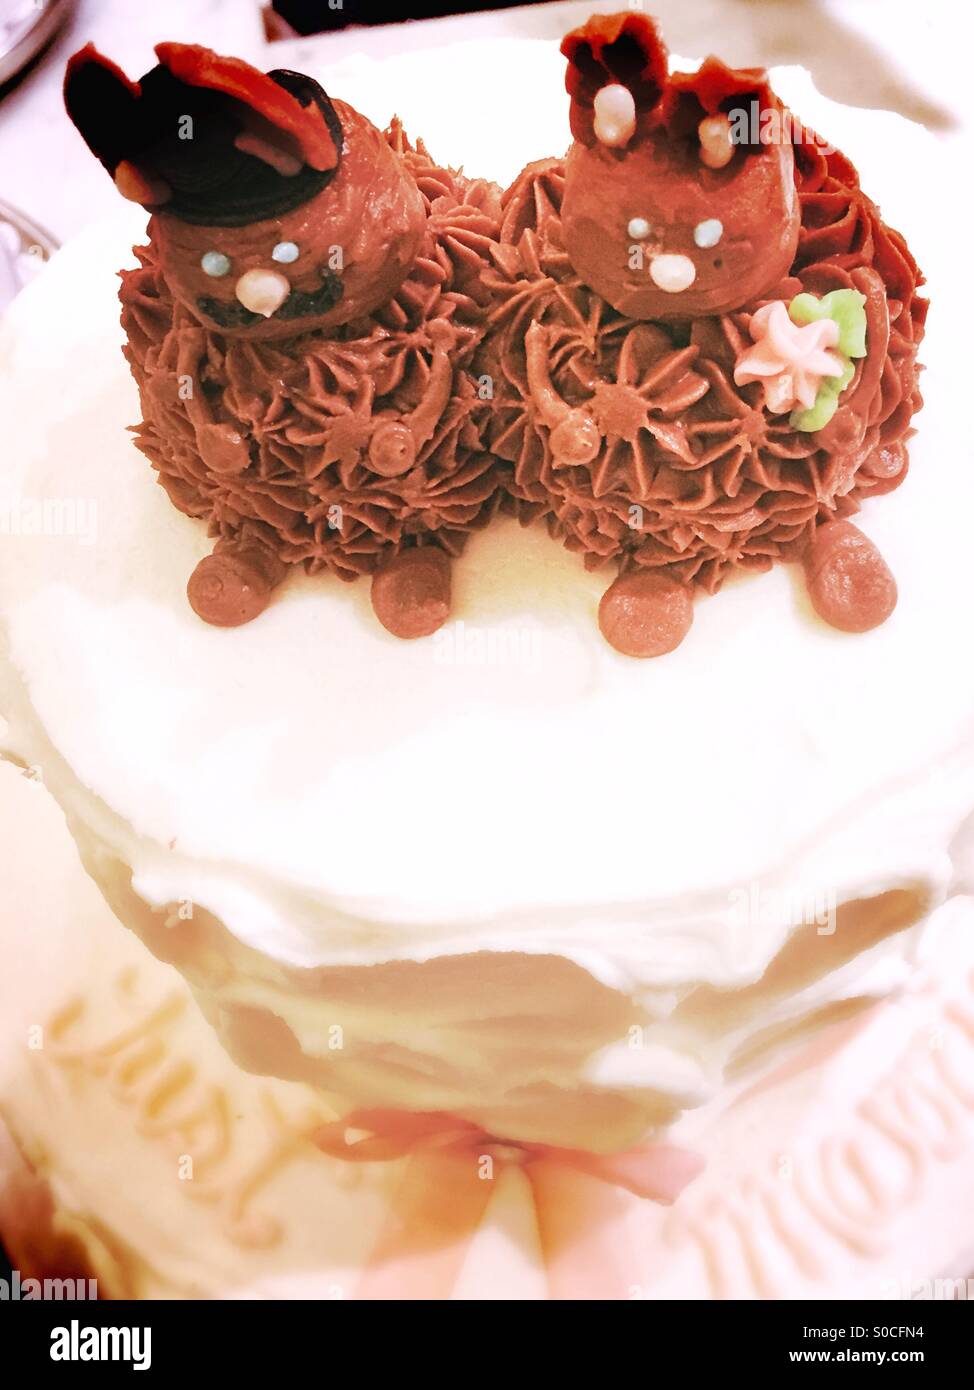 Easter wedding cake Stock Photo